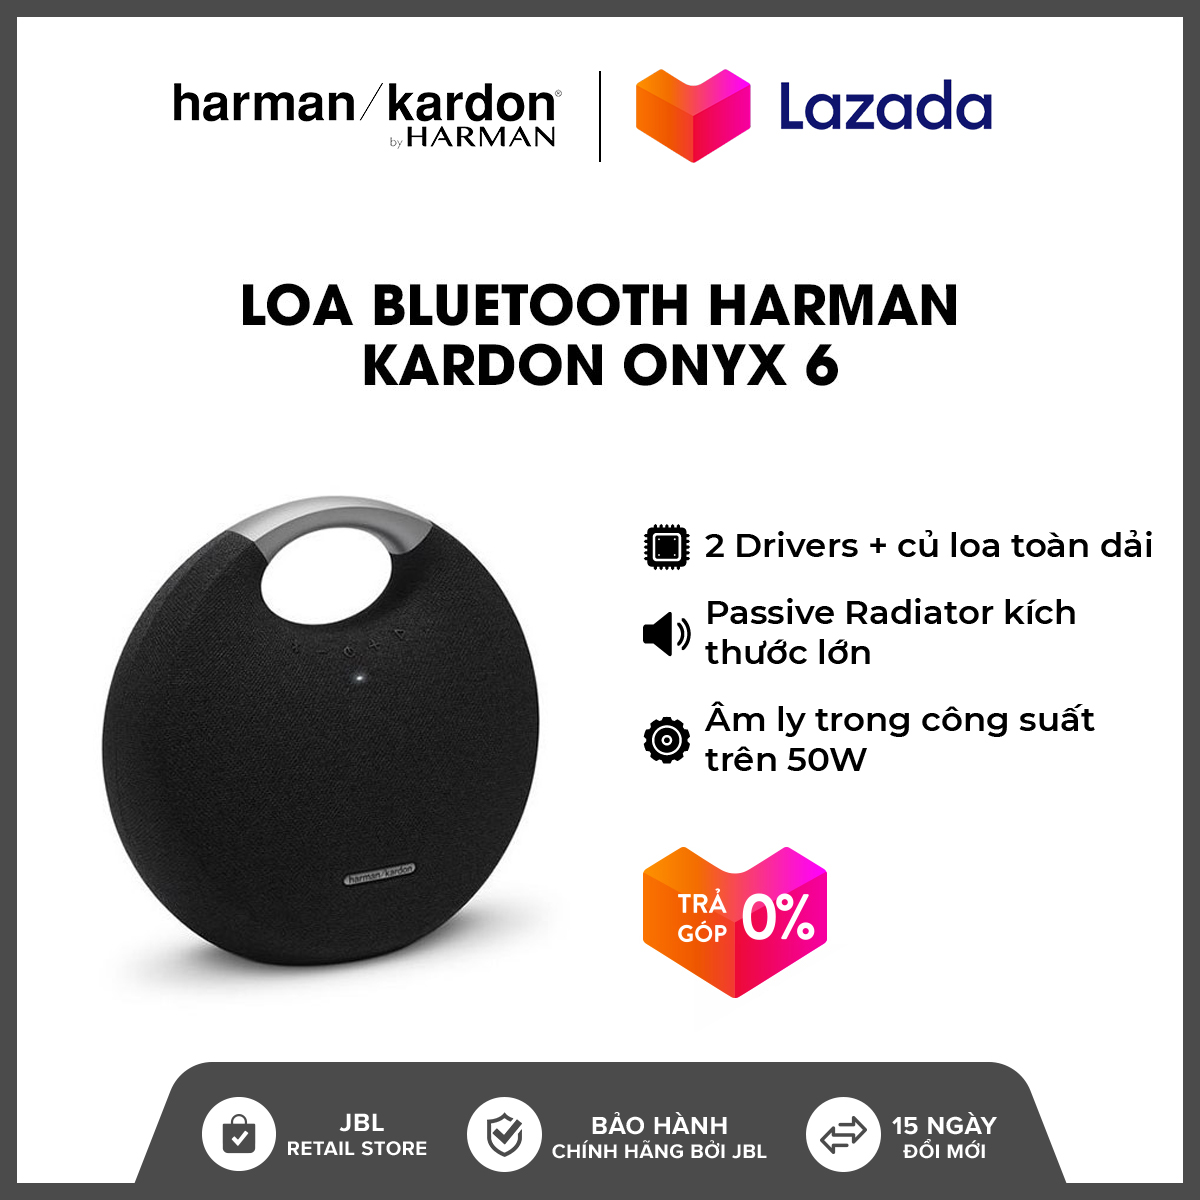 [TRẢ GÓP 0%] Loa Bluetooth Harman Kardon Onyx 6 l Công suất 50W l 2 Driver kèm củ loa toàn...